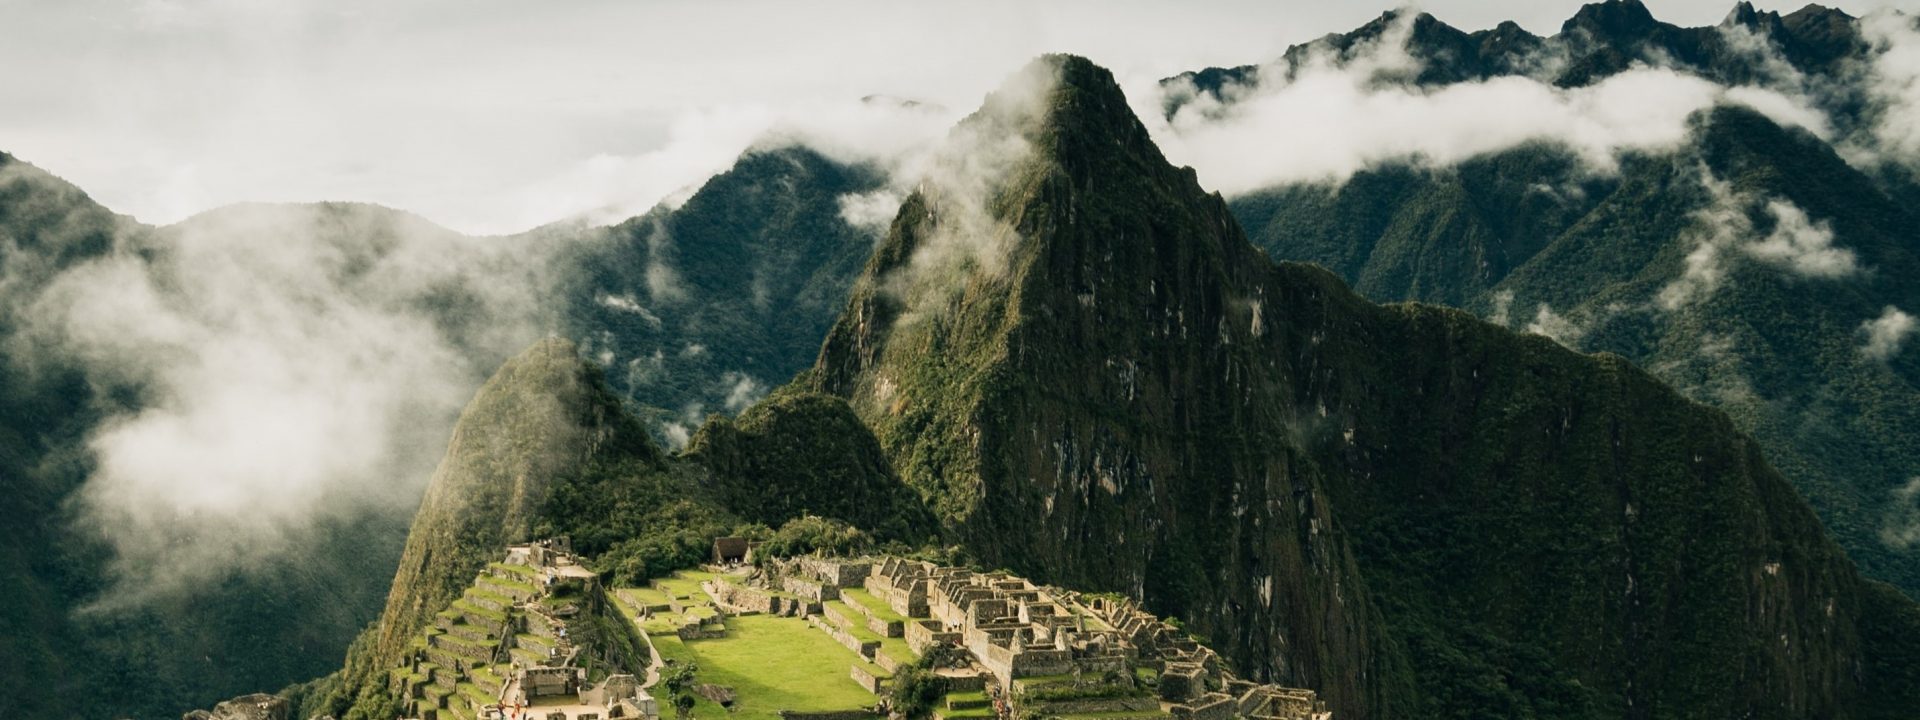 Peruvian valleys, valleys for the world